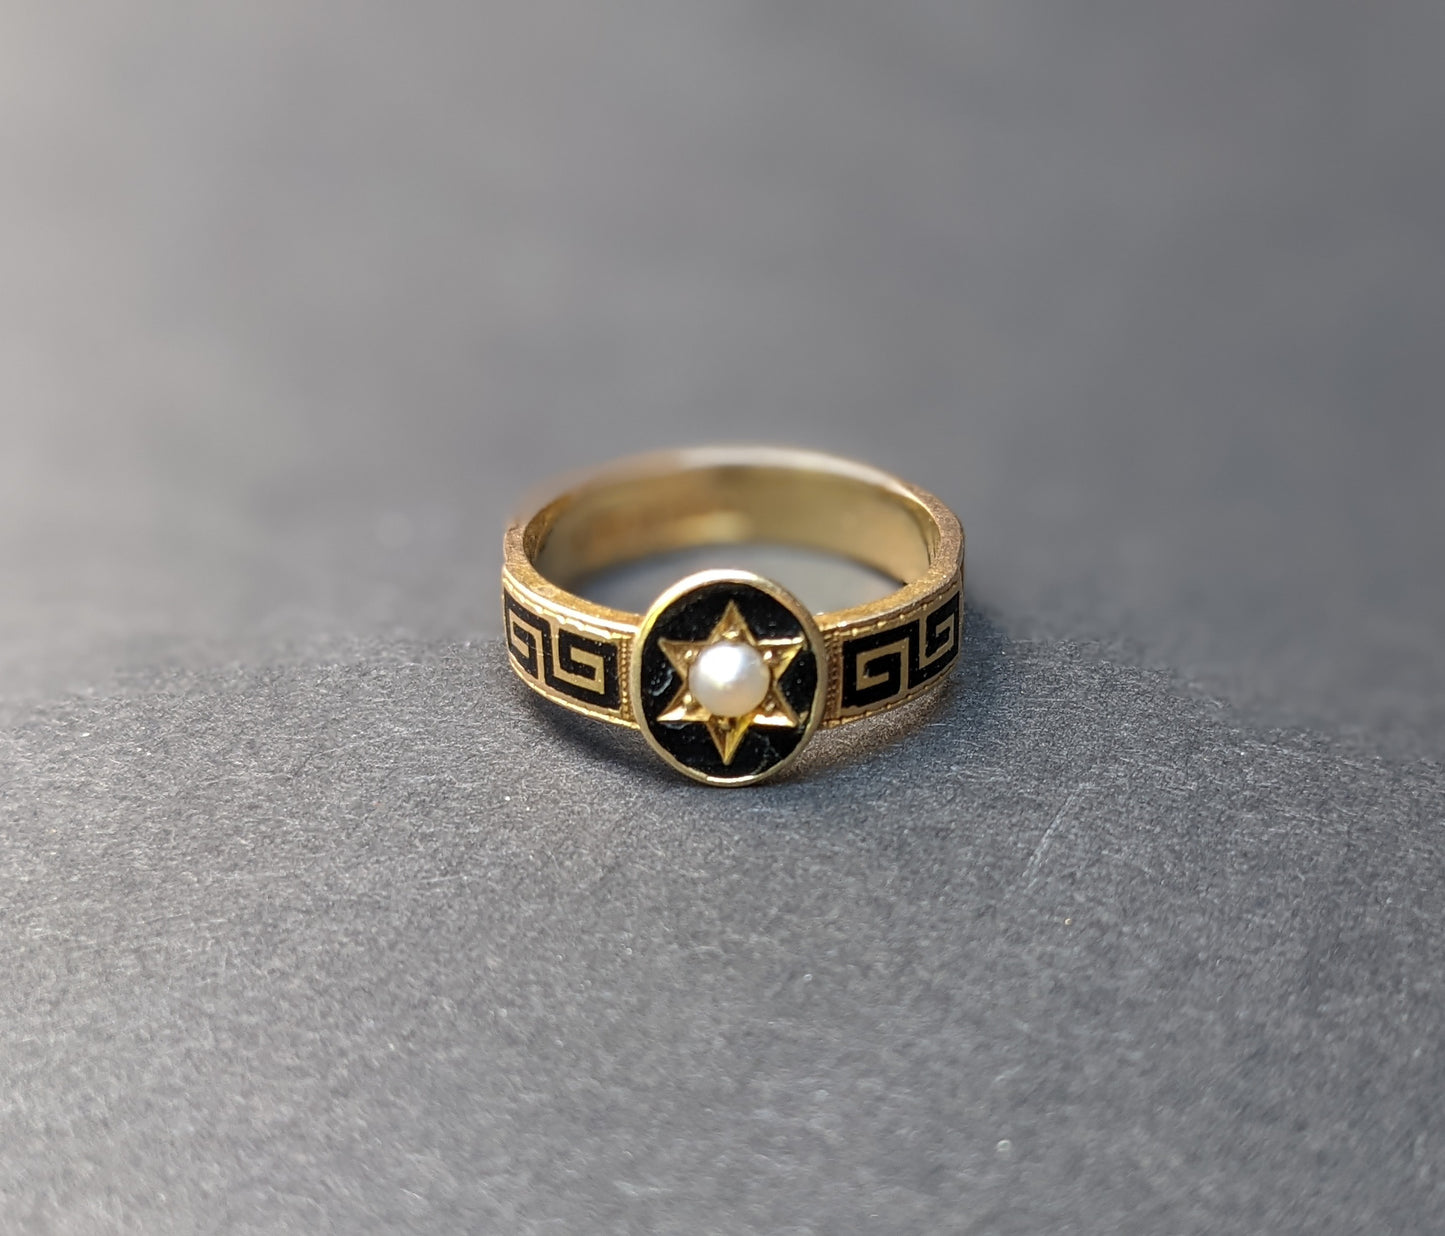 15k English mourning ring with Greek key black enamel